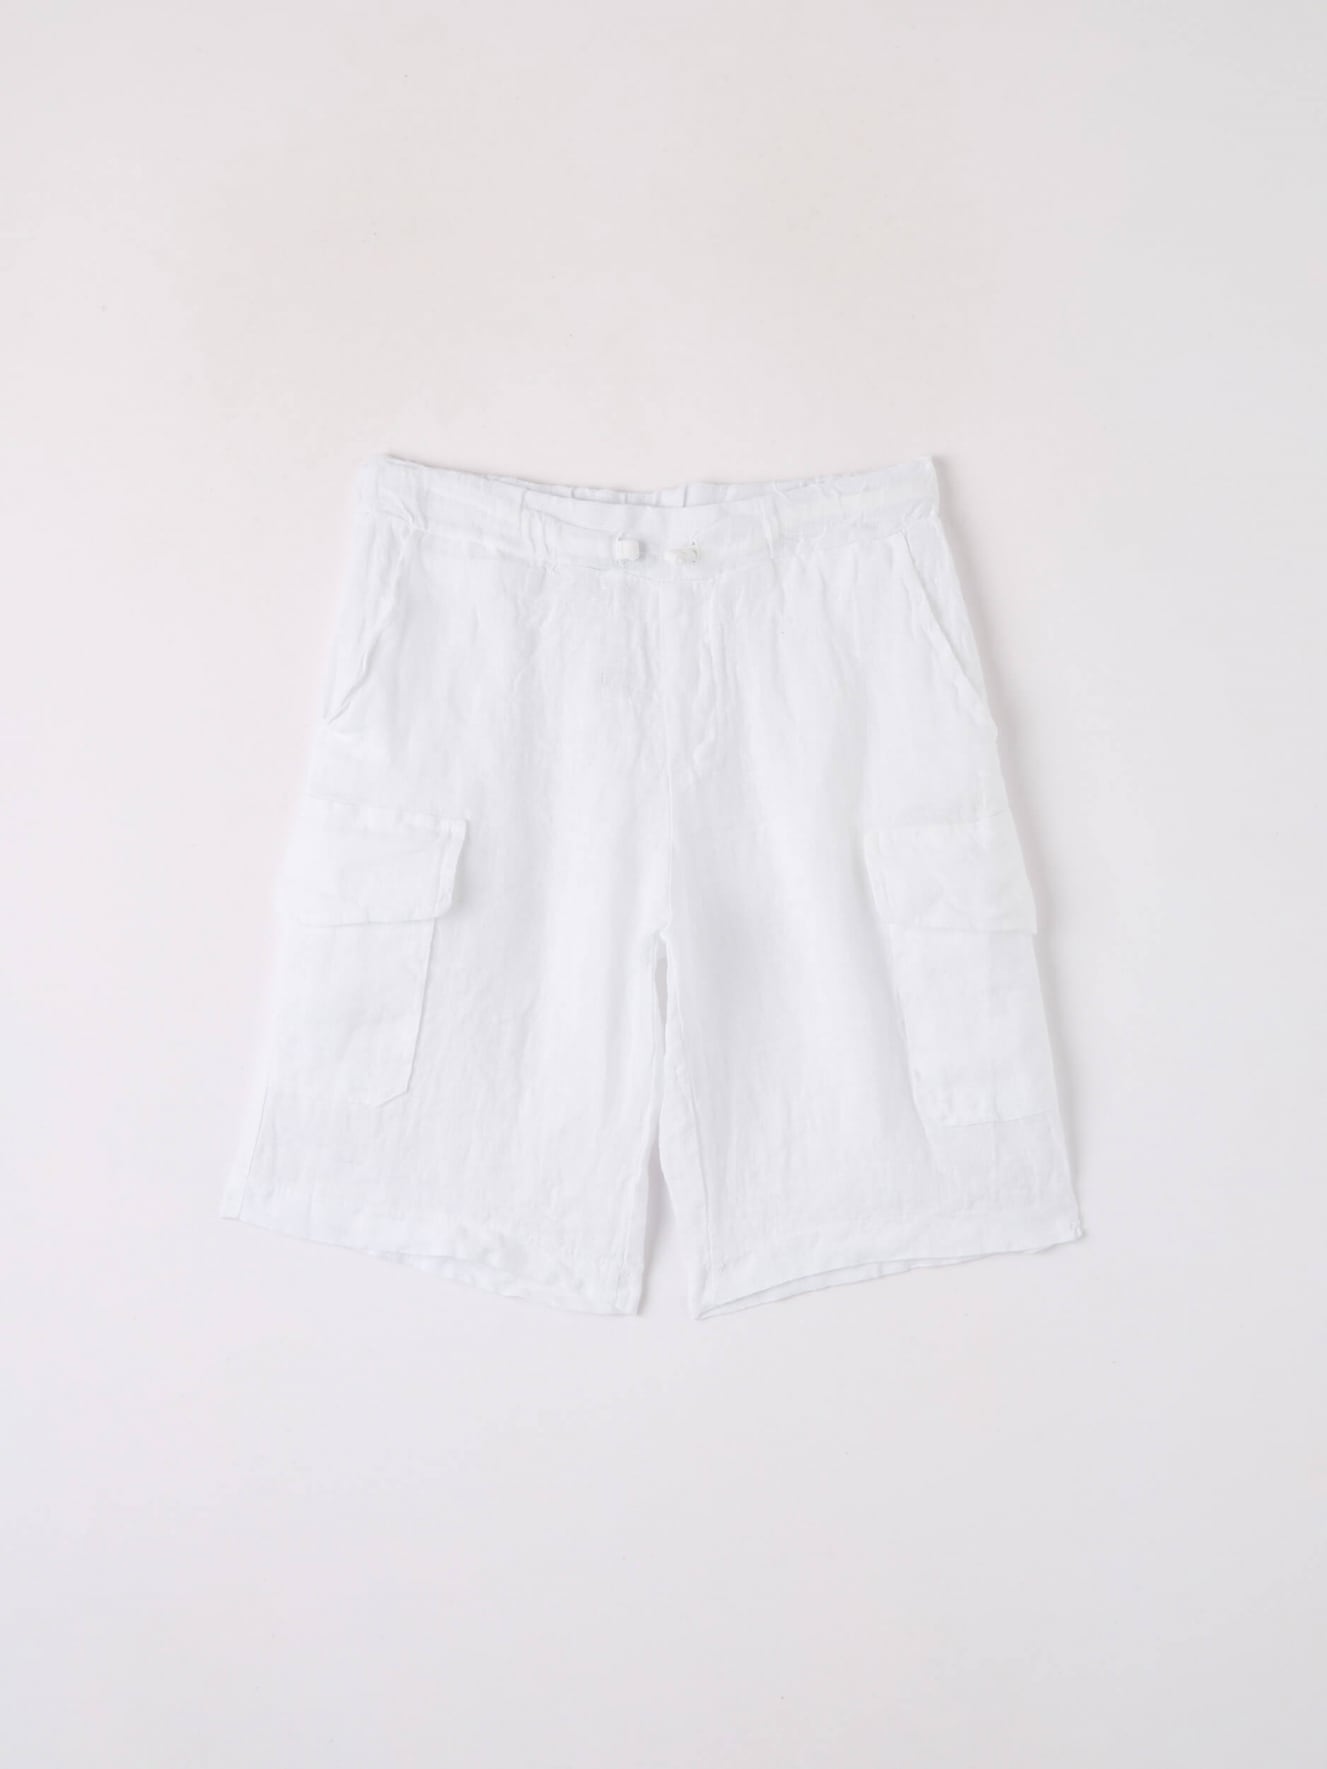 Pantalones cortos nino Terranova